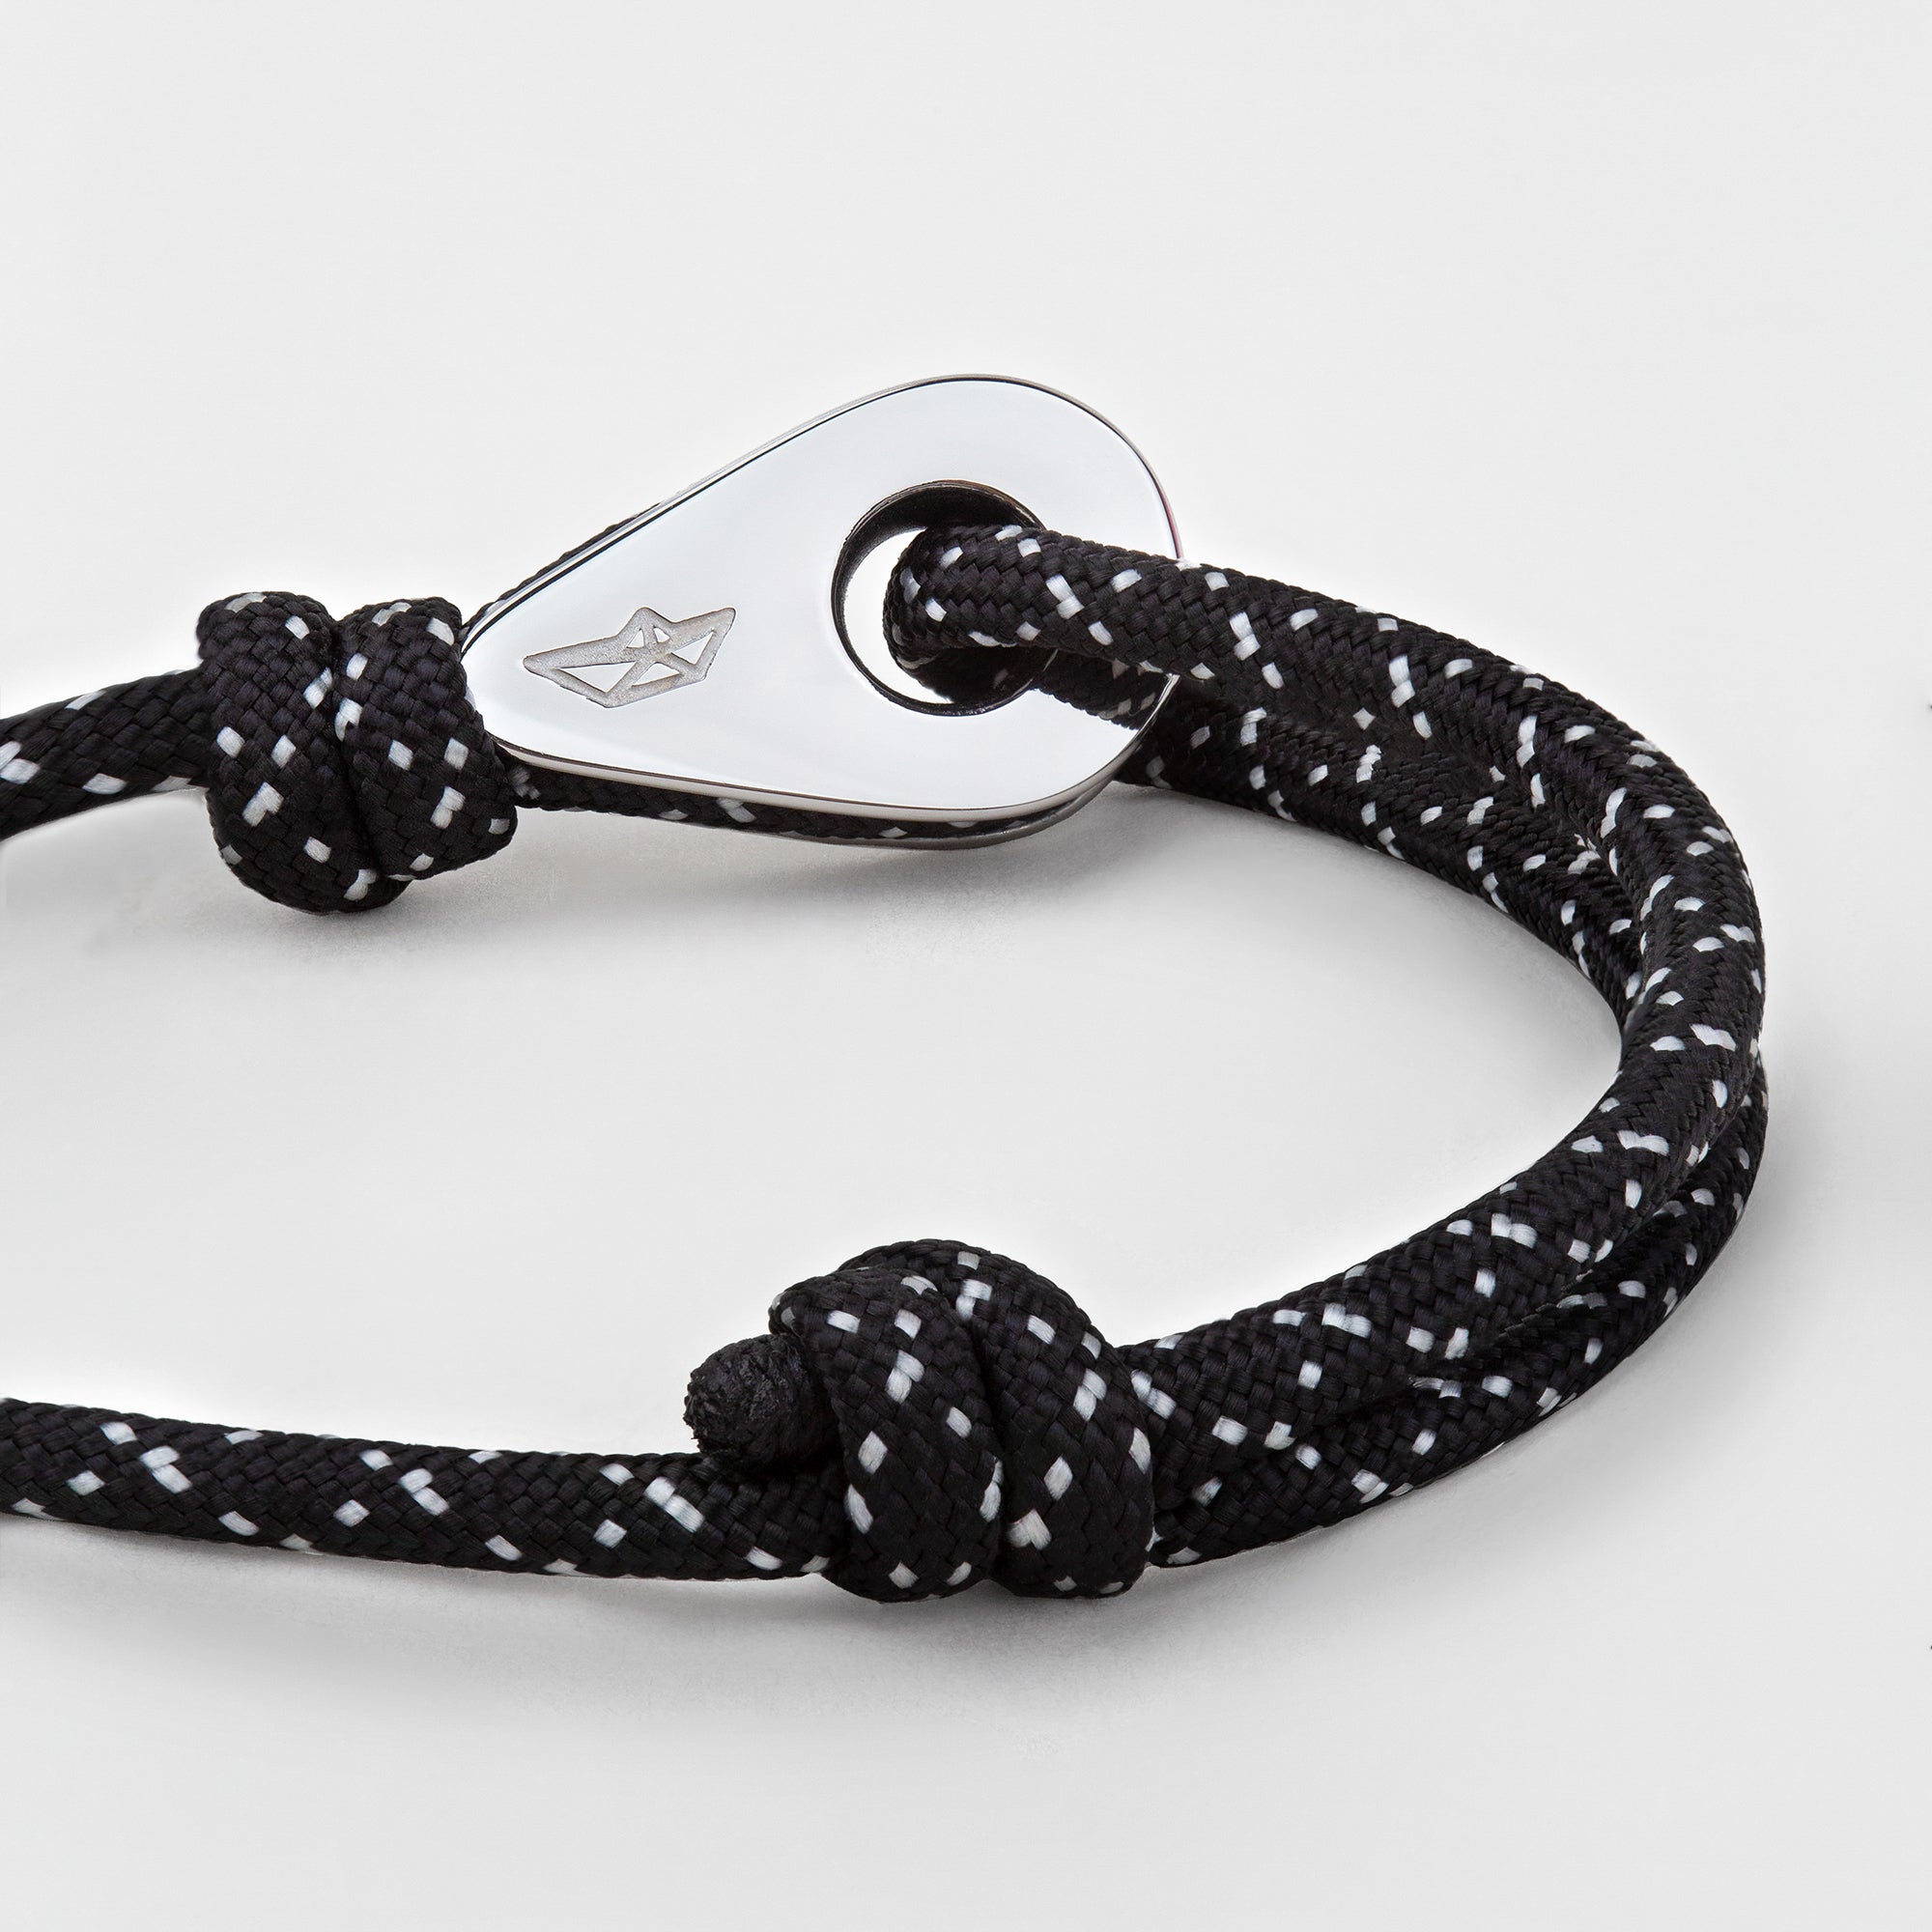 AMSTERDAM Thimble Bracelets Bracelets Rope Womens Paracord Fathom Wristbands Charm – Mens